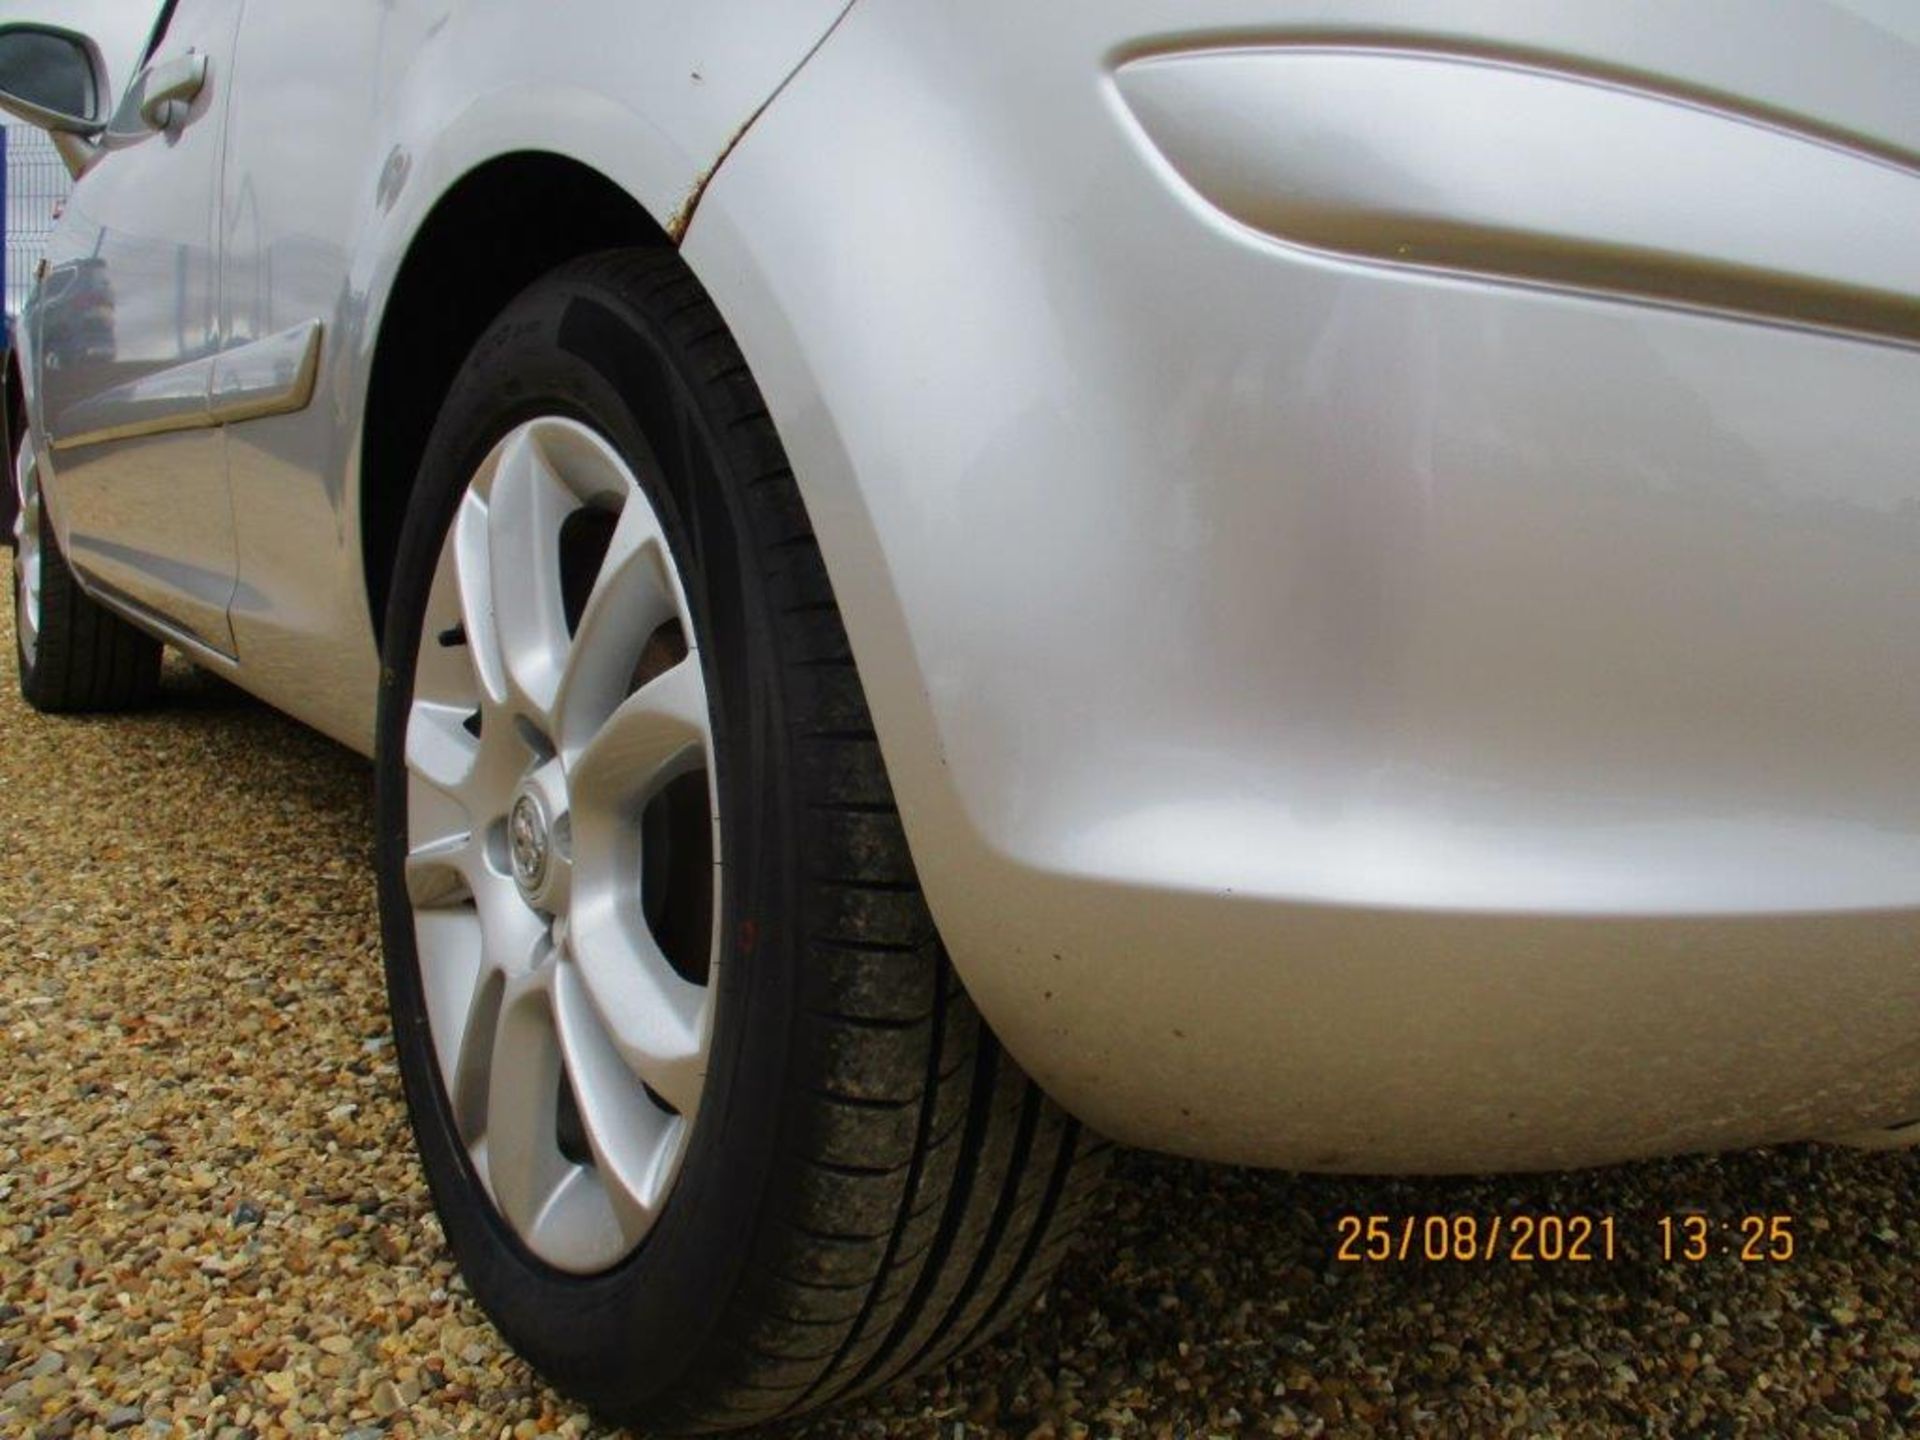 07 57 Vauxhall Corsa SXI 3dr - Image 4 of 17